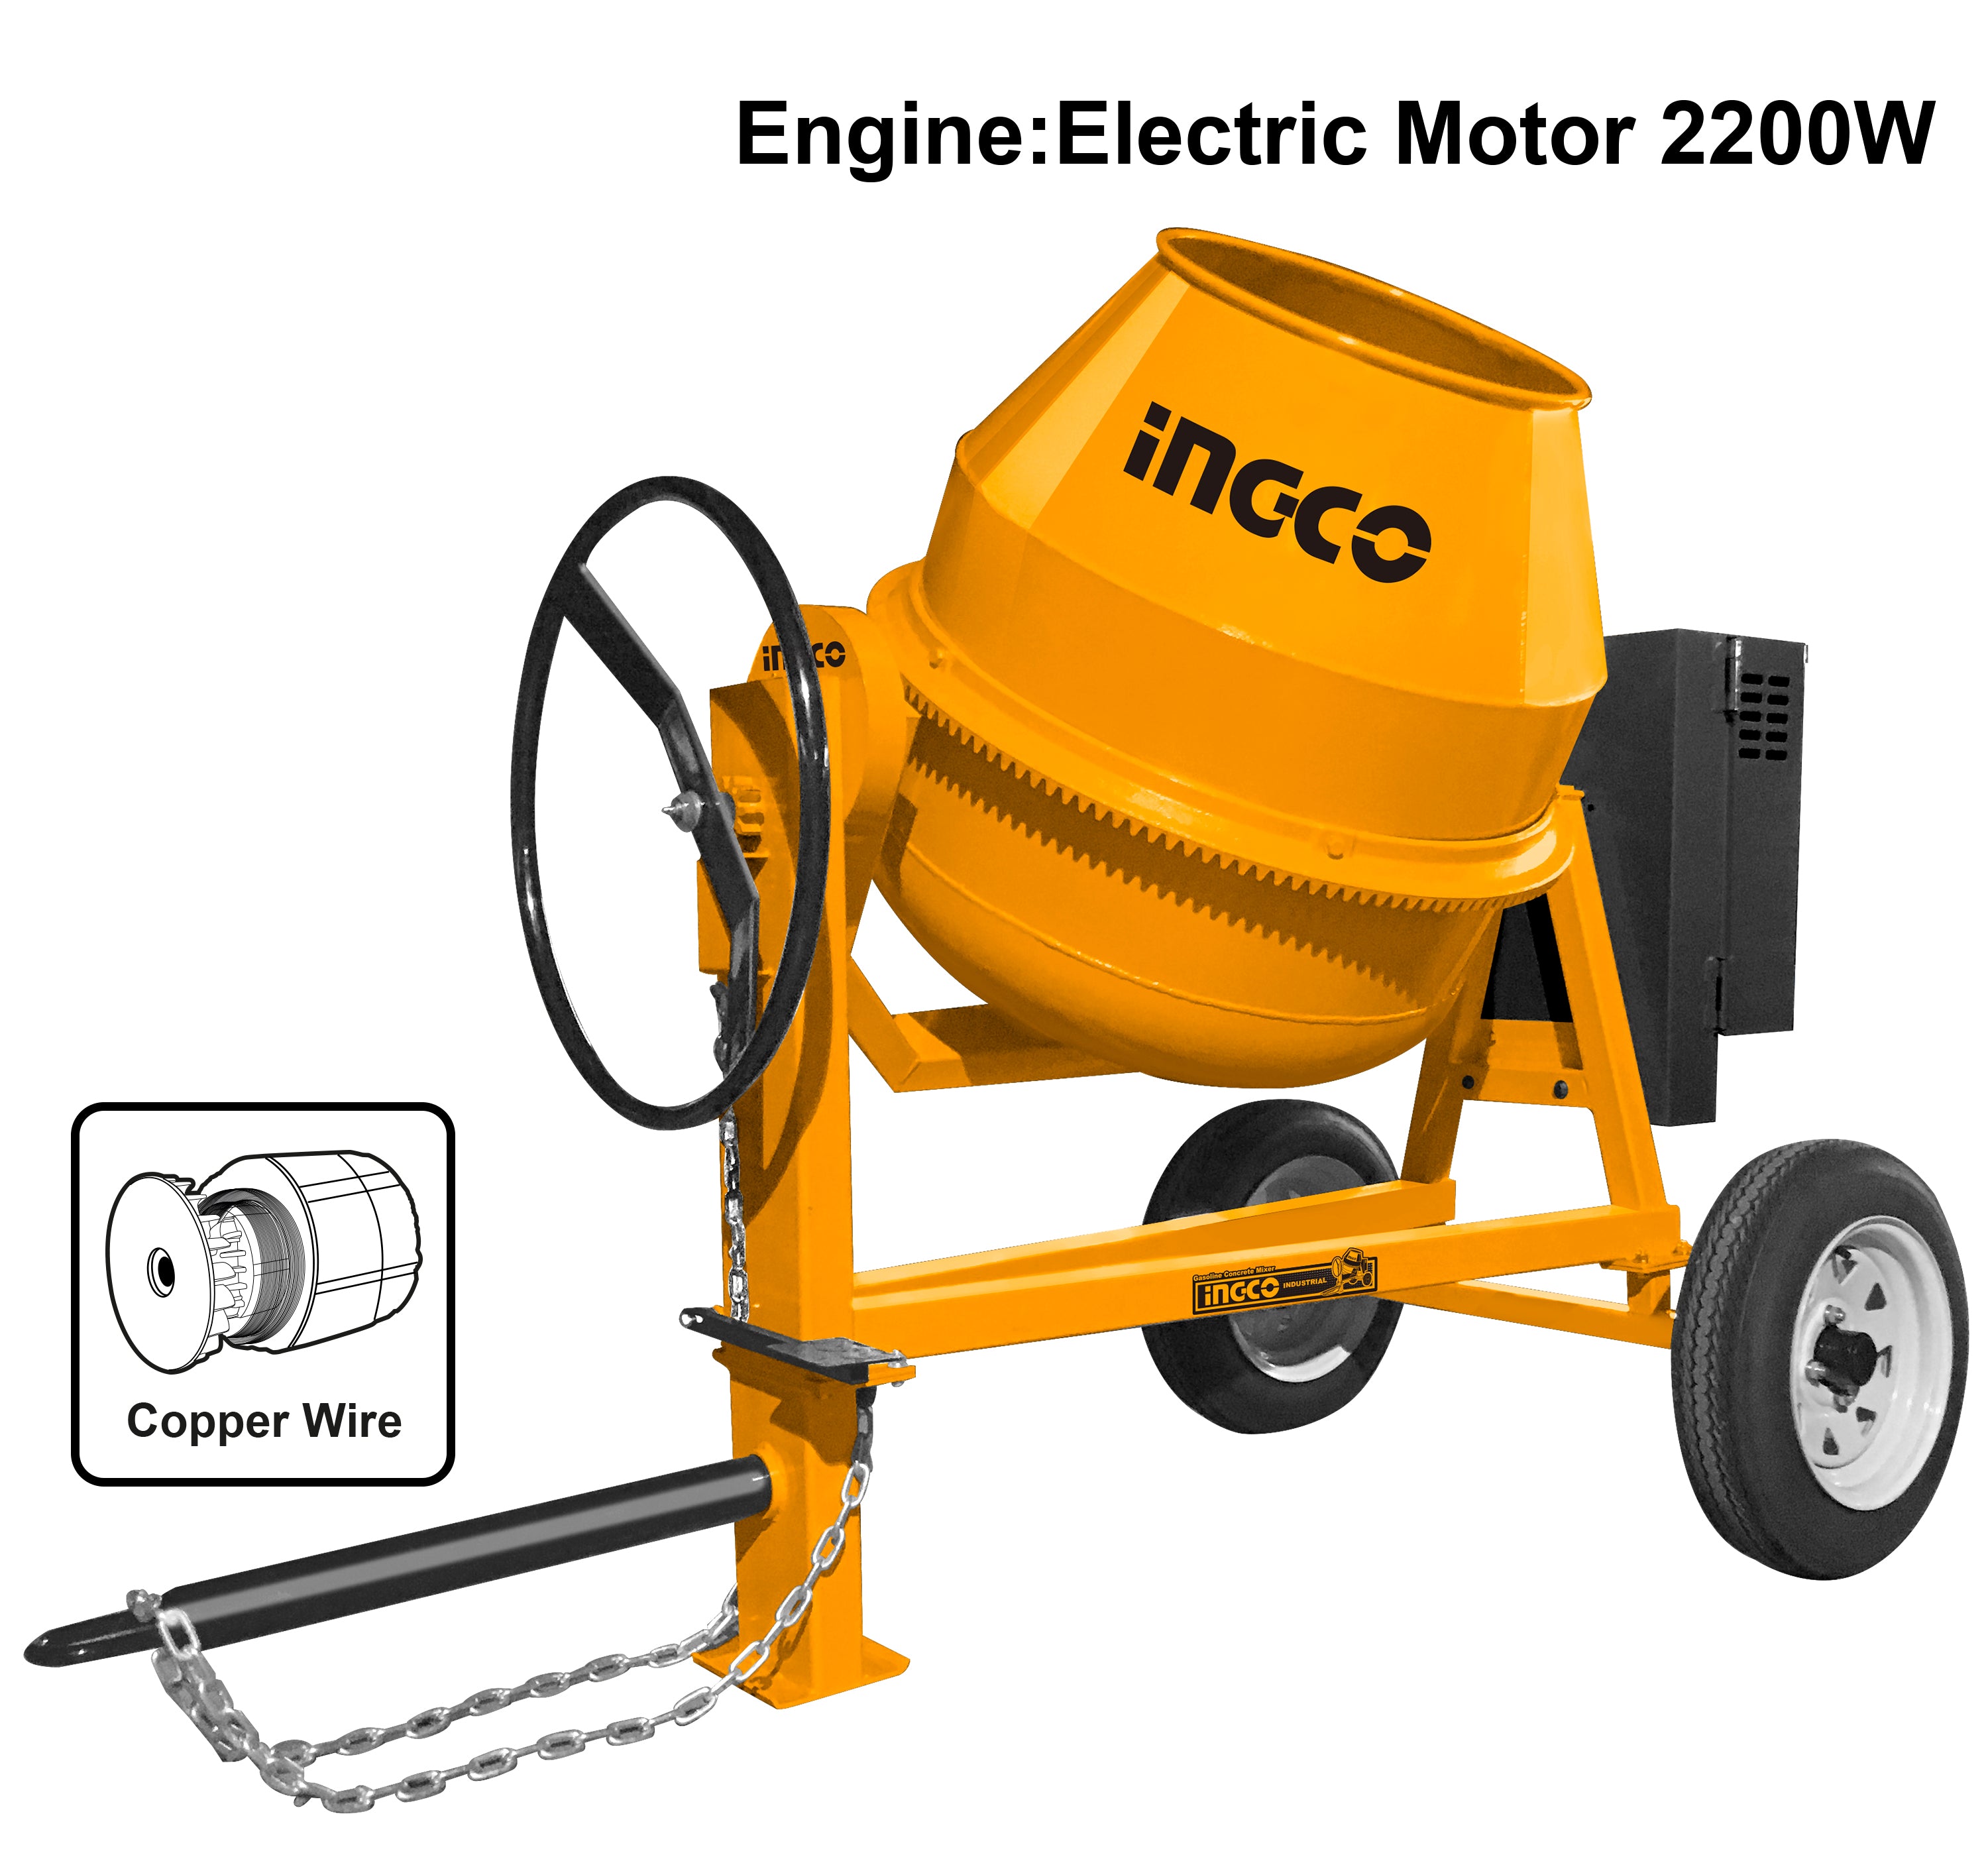 INGCO Electric Concrete Mixer Price in Pakistan